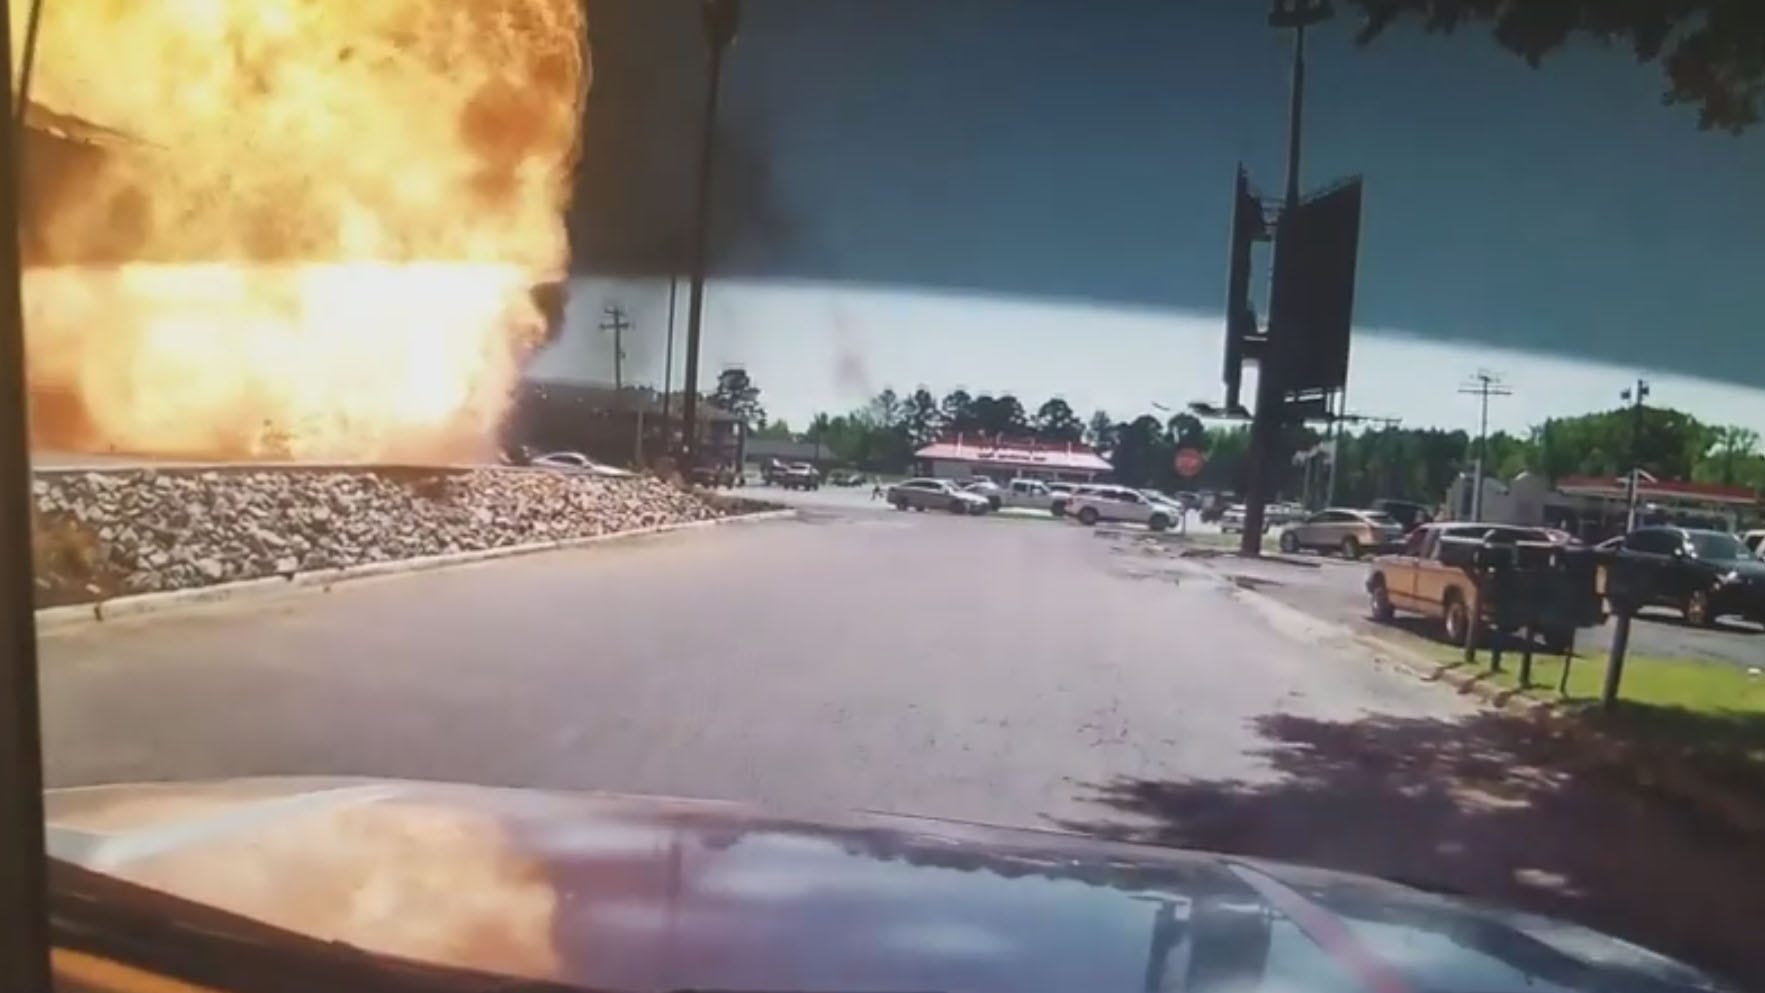 FOX NEWS: Truck explodes in Burger King drive-thru